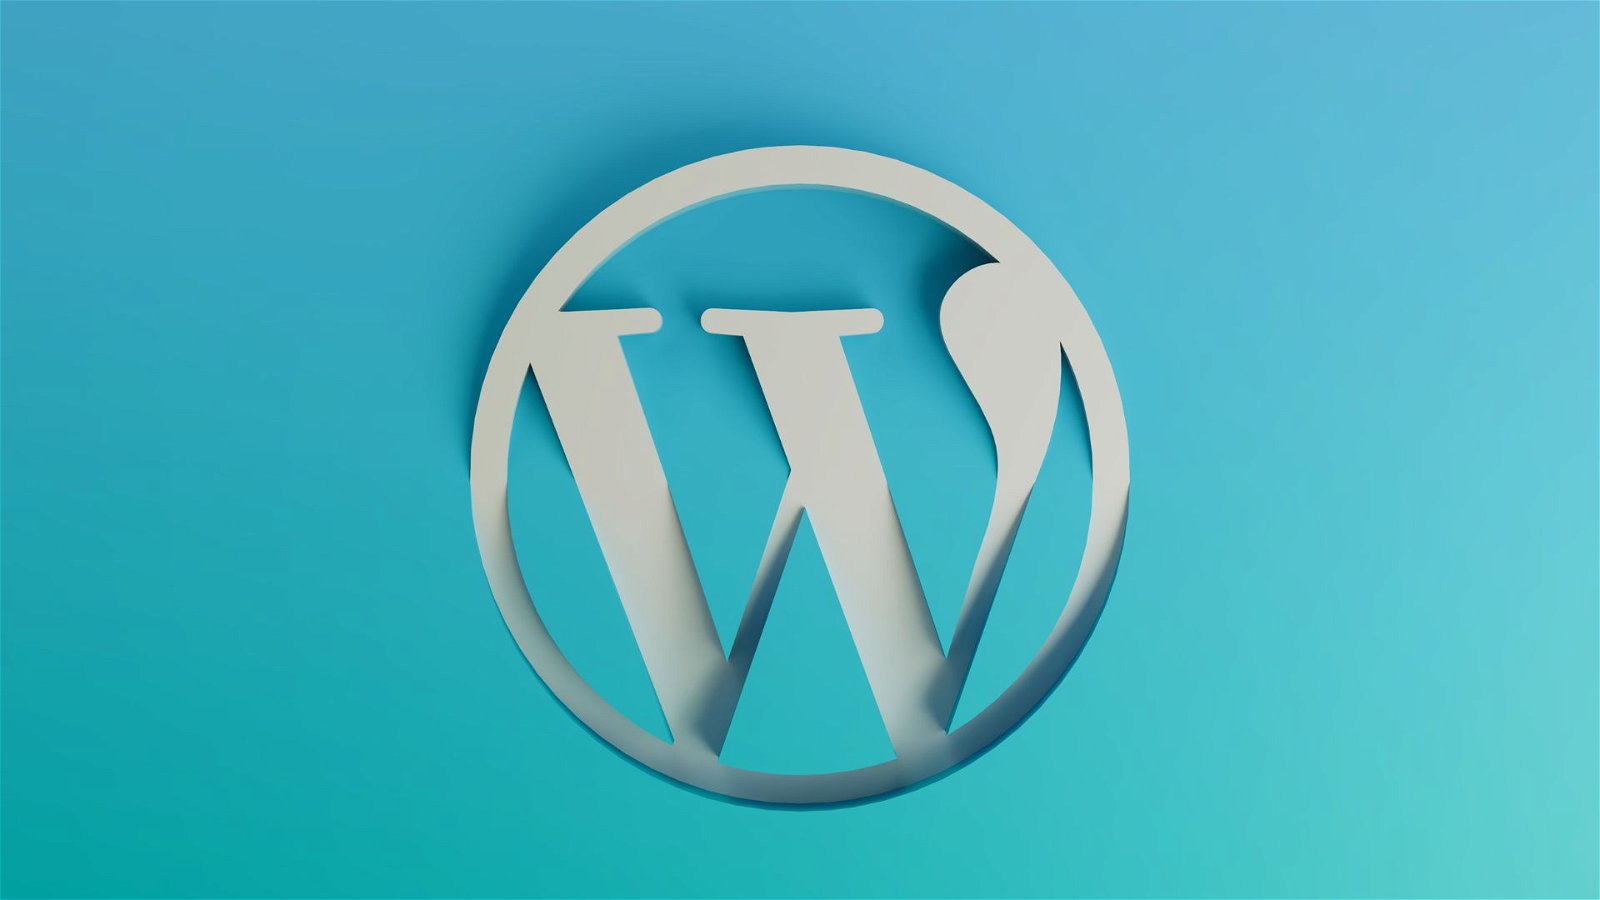 WordPress Maintenance